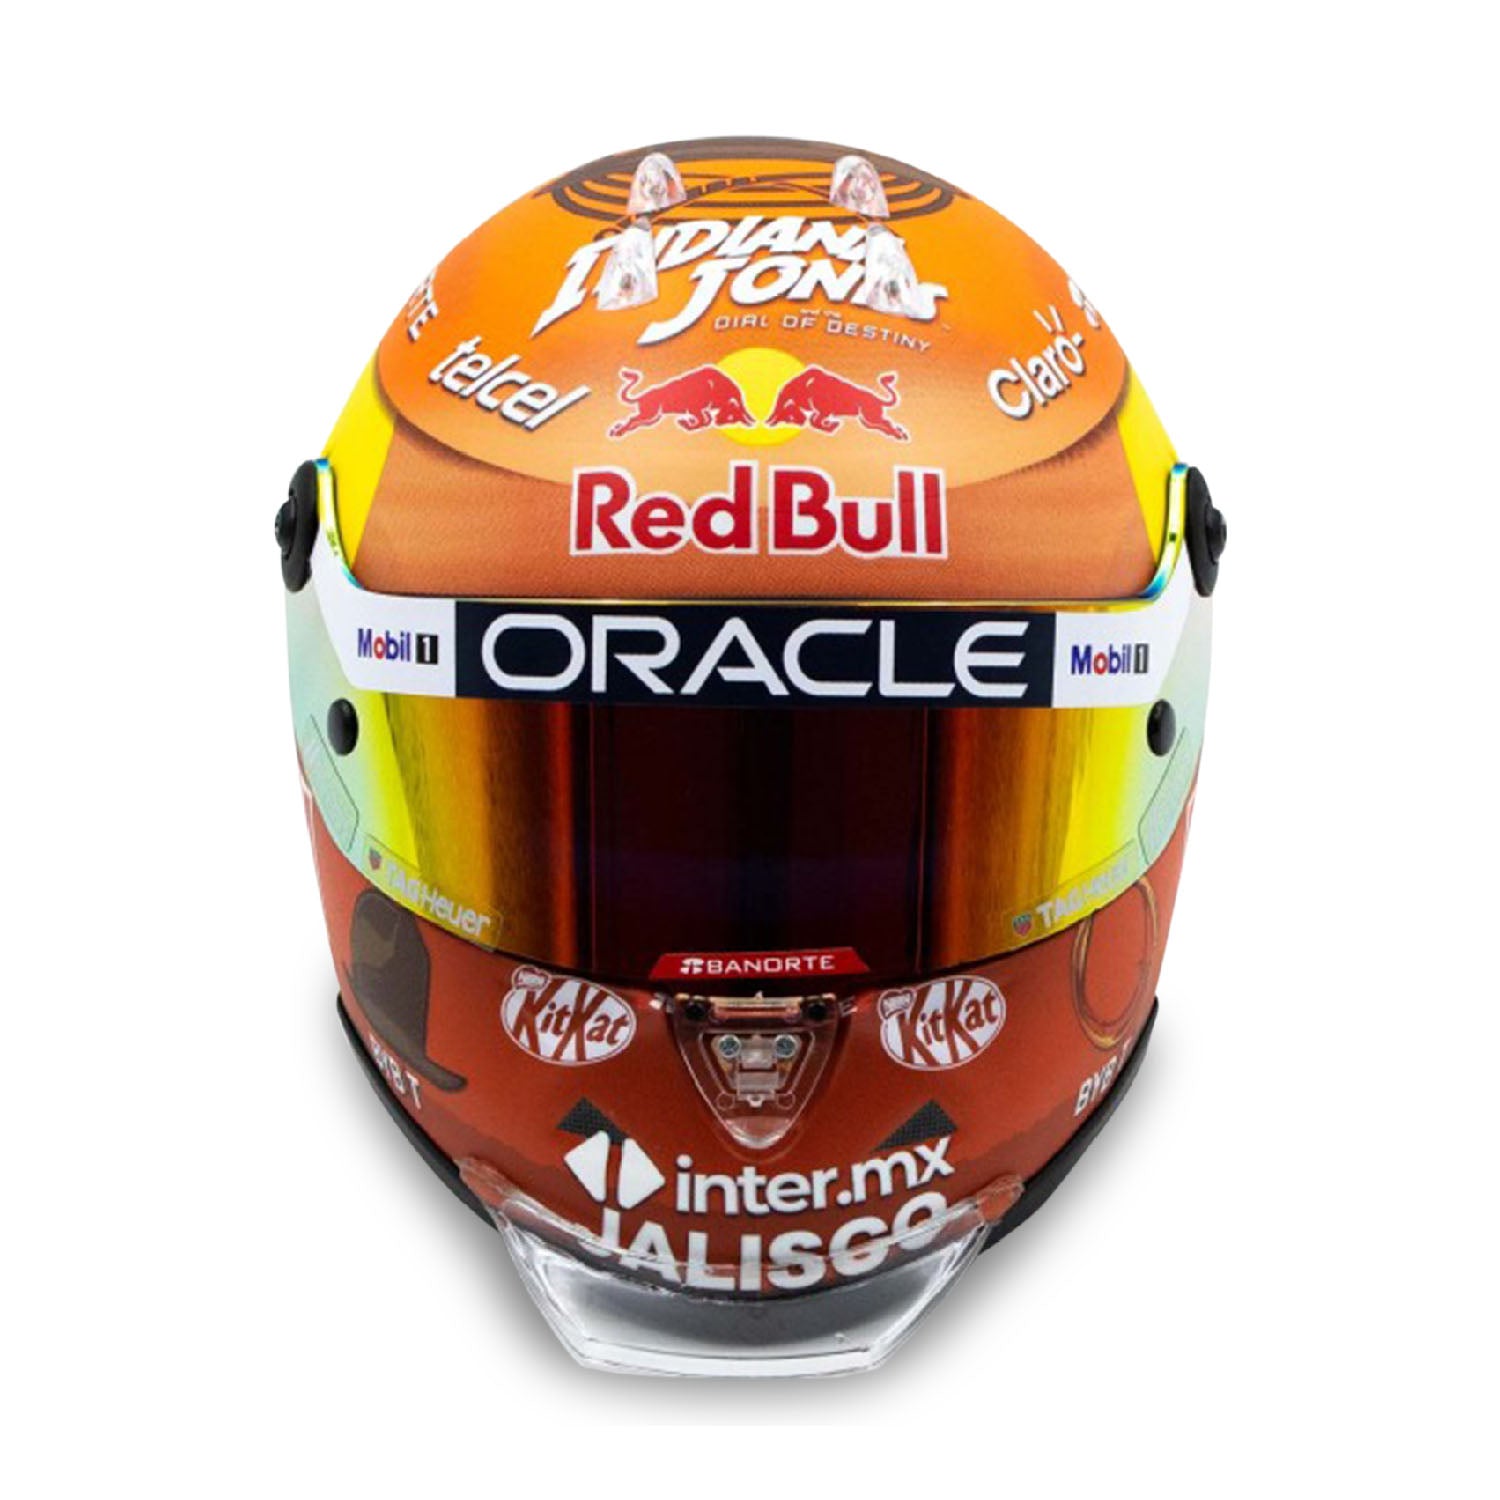 Sergio Perez #11 2023 Indiana Jones Limited Edition Mini Helmet 1:2 - Red Bull Racing - Fueler store